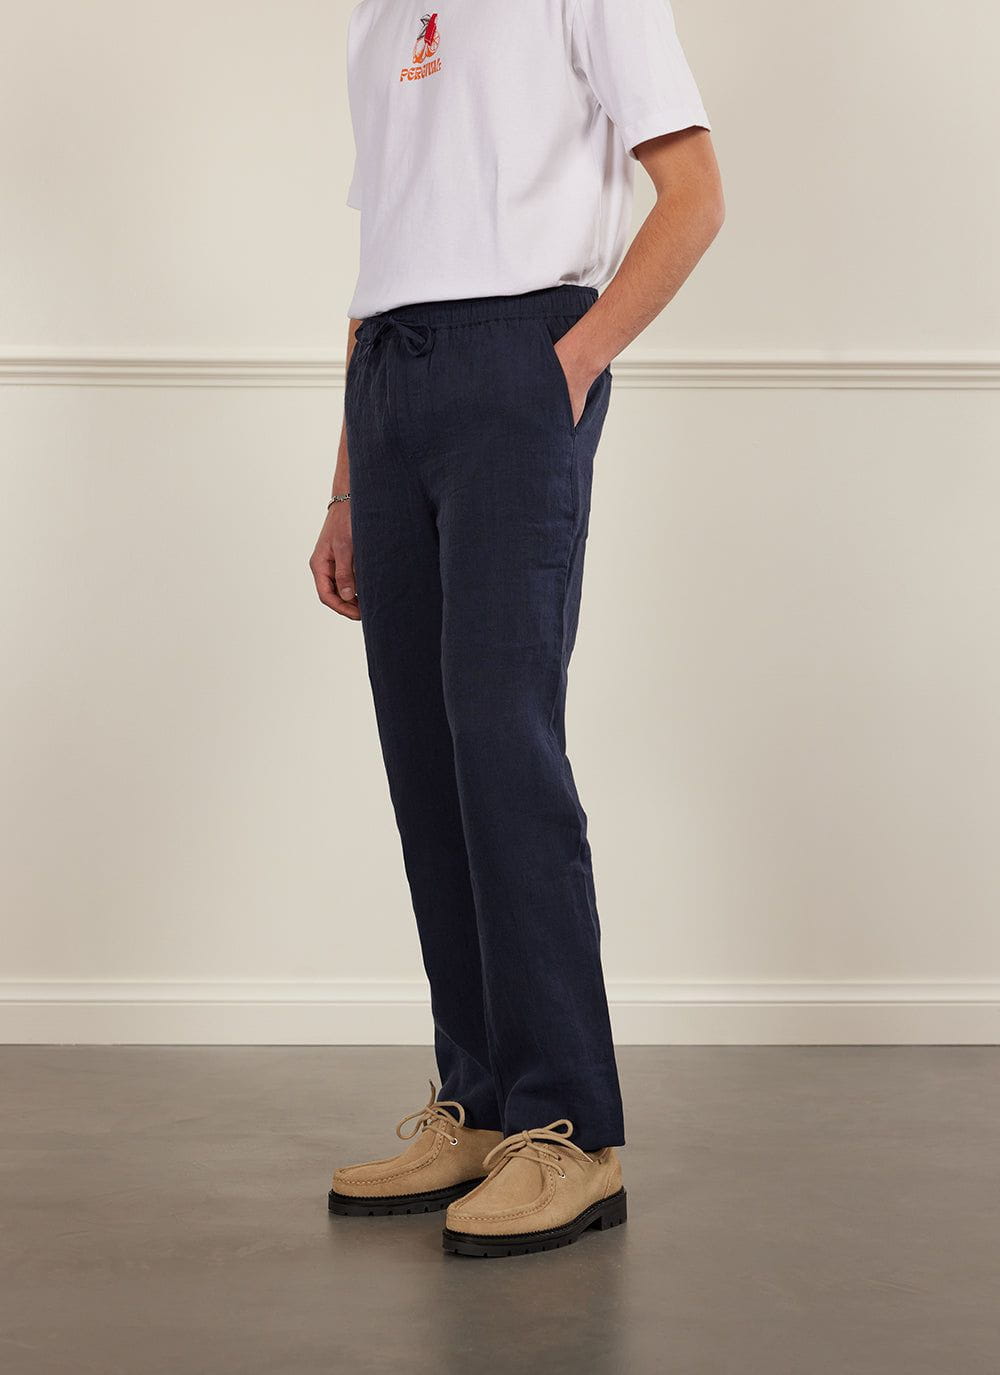 Men'S Casual Slim Sports Pants Calf-Length Linen Trousers Baggy Harem Pants  Mens Loose Fitting Pants Trouser Casual Pants White 4XL - Walmart.com